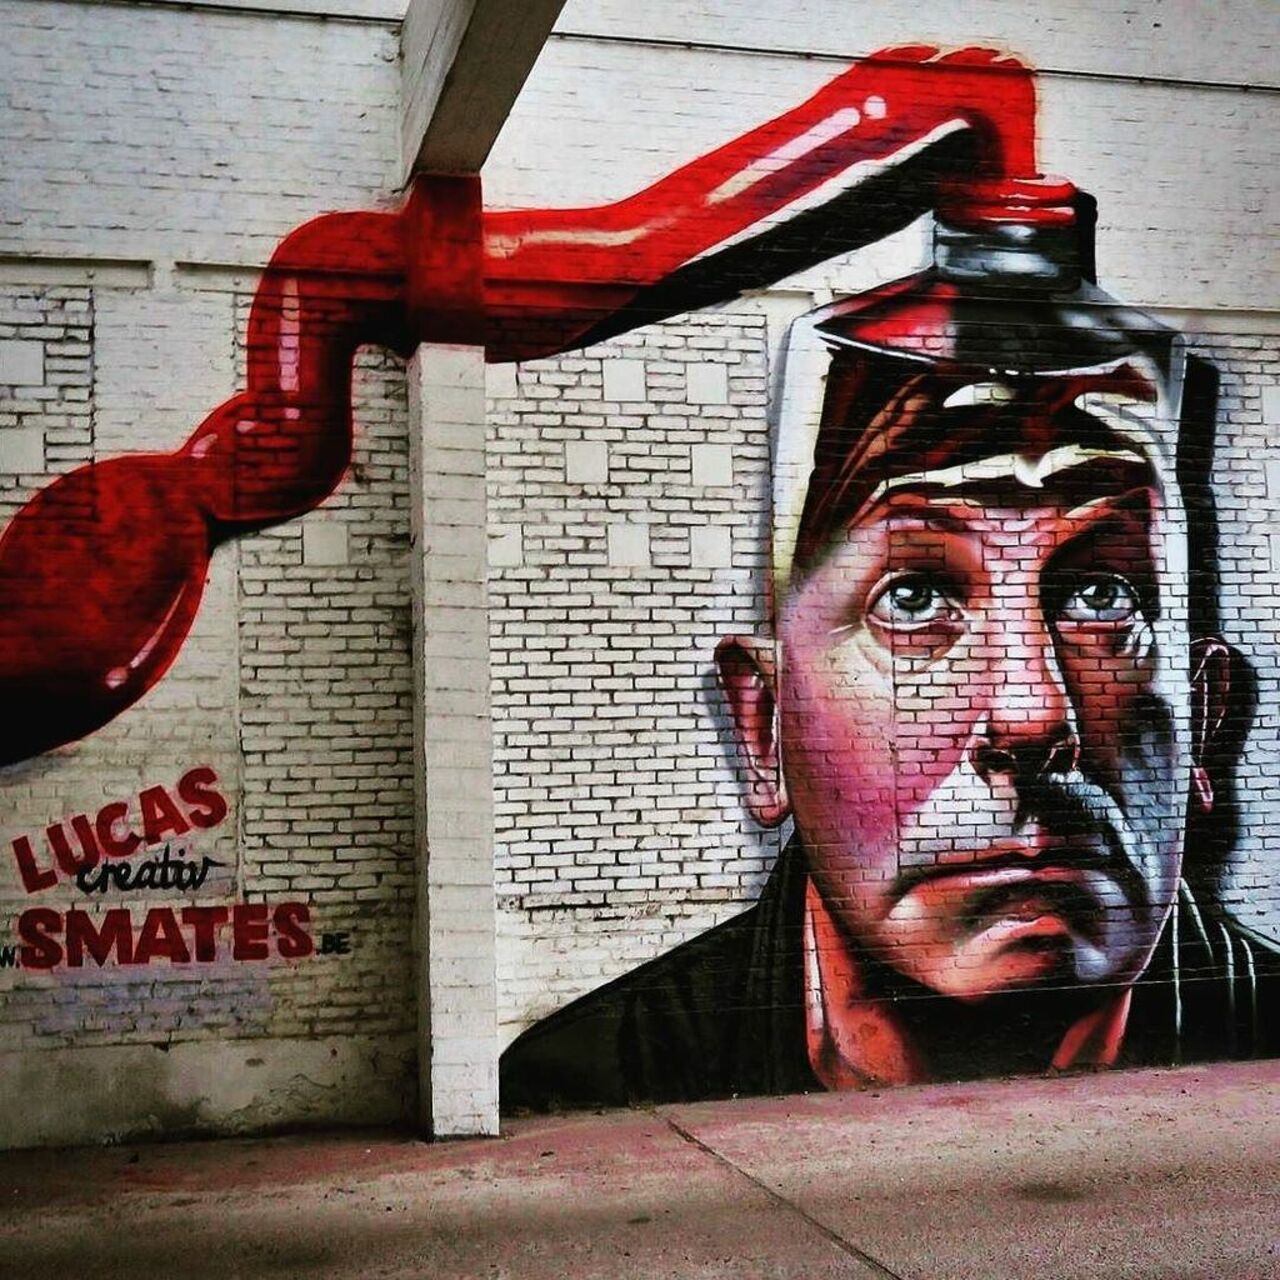 unbeatable #smates - #Mechelen #visitmechelen #Belgium #streetart #graffiti #streetartbel … http://ift.tt/204BdK9 https://t.co/B3qg0BGax4